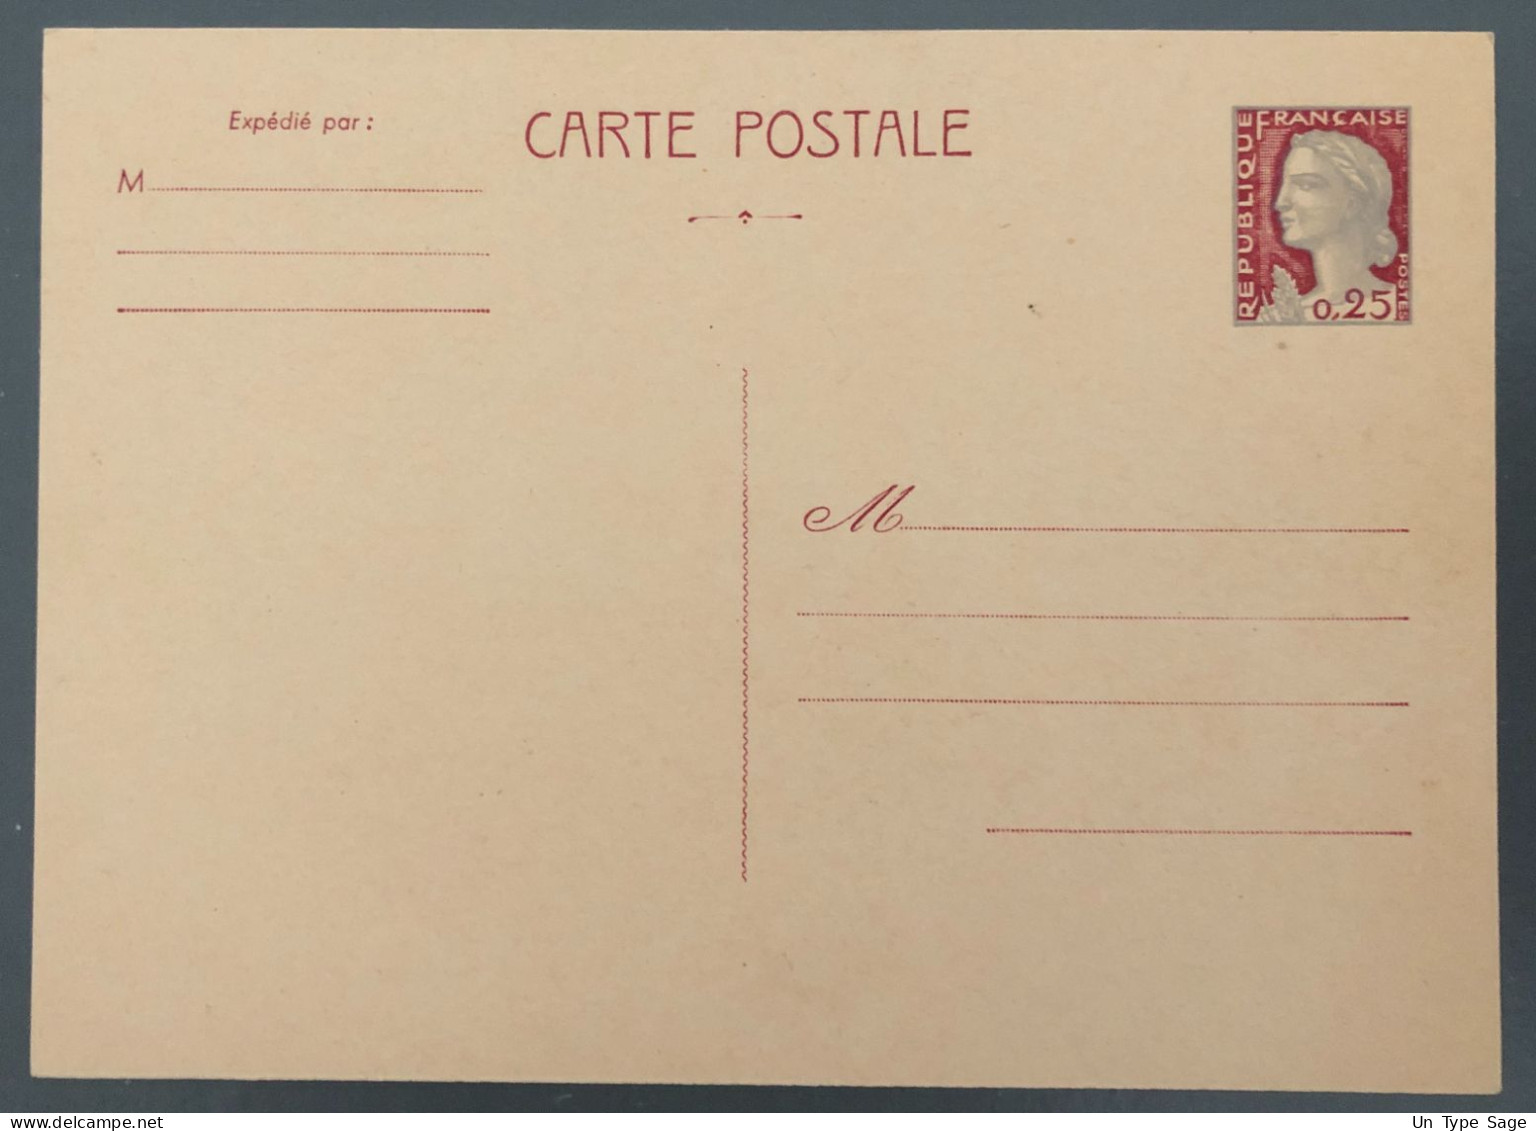 France Entier Type Marianne 25c. - Carte Postale - (B1973) - Newspaper Bands